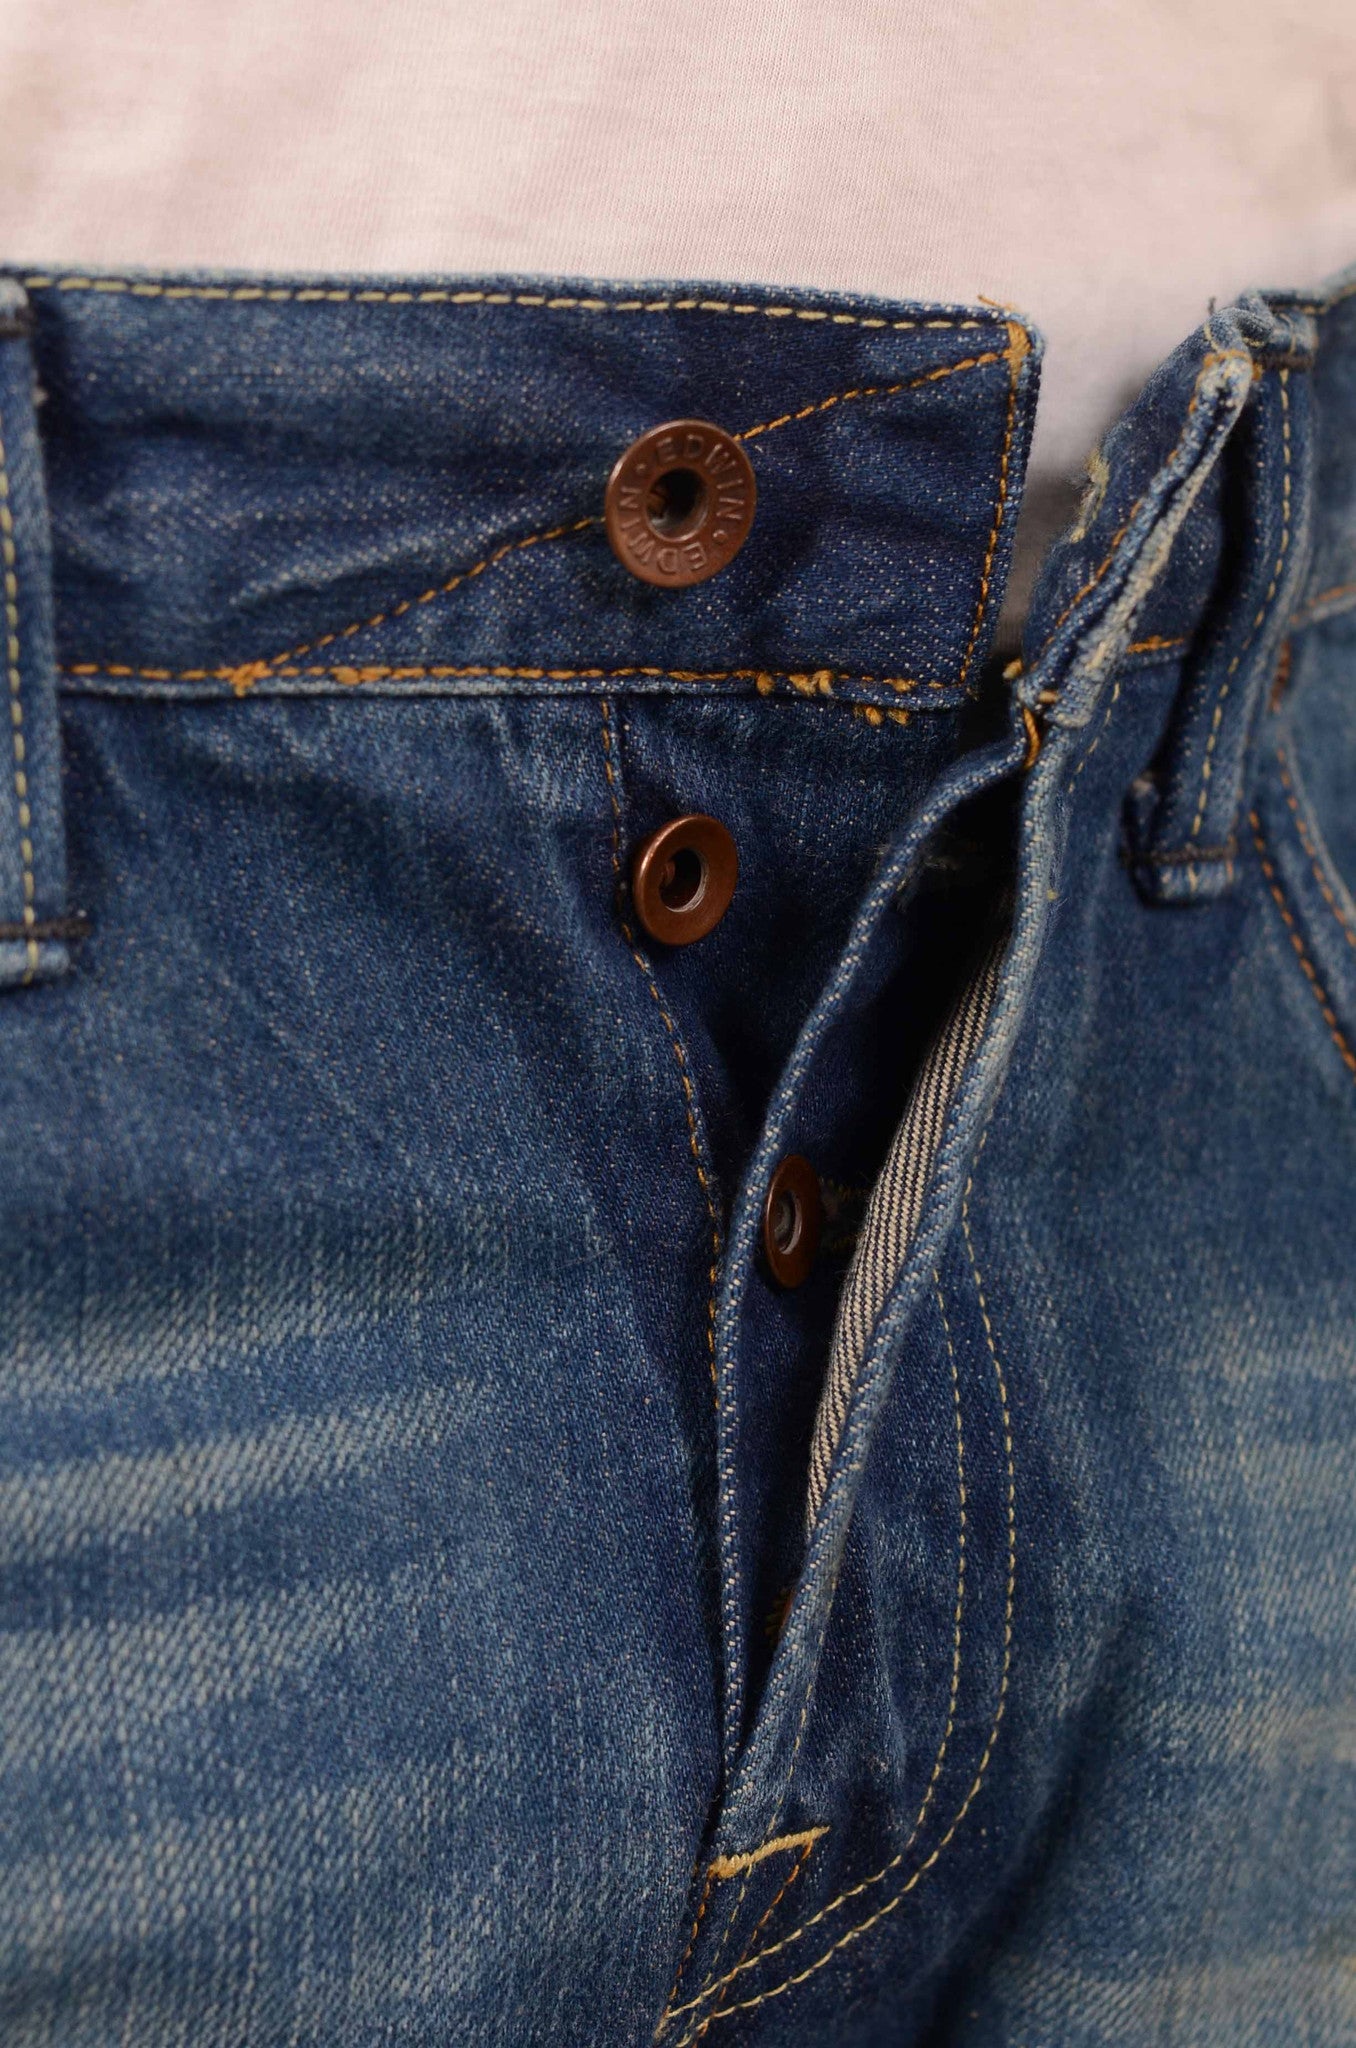 EDWIN Blue Cotton Distressed Denim Slim Fit 5 Pockets Selvedge Jeans W35 L34 - SARTORIALE - 3